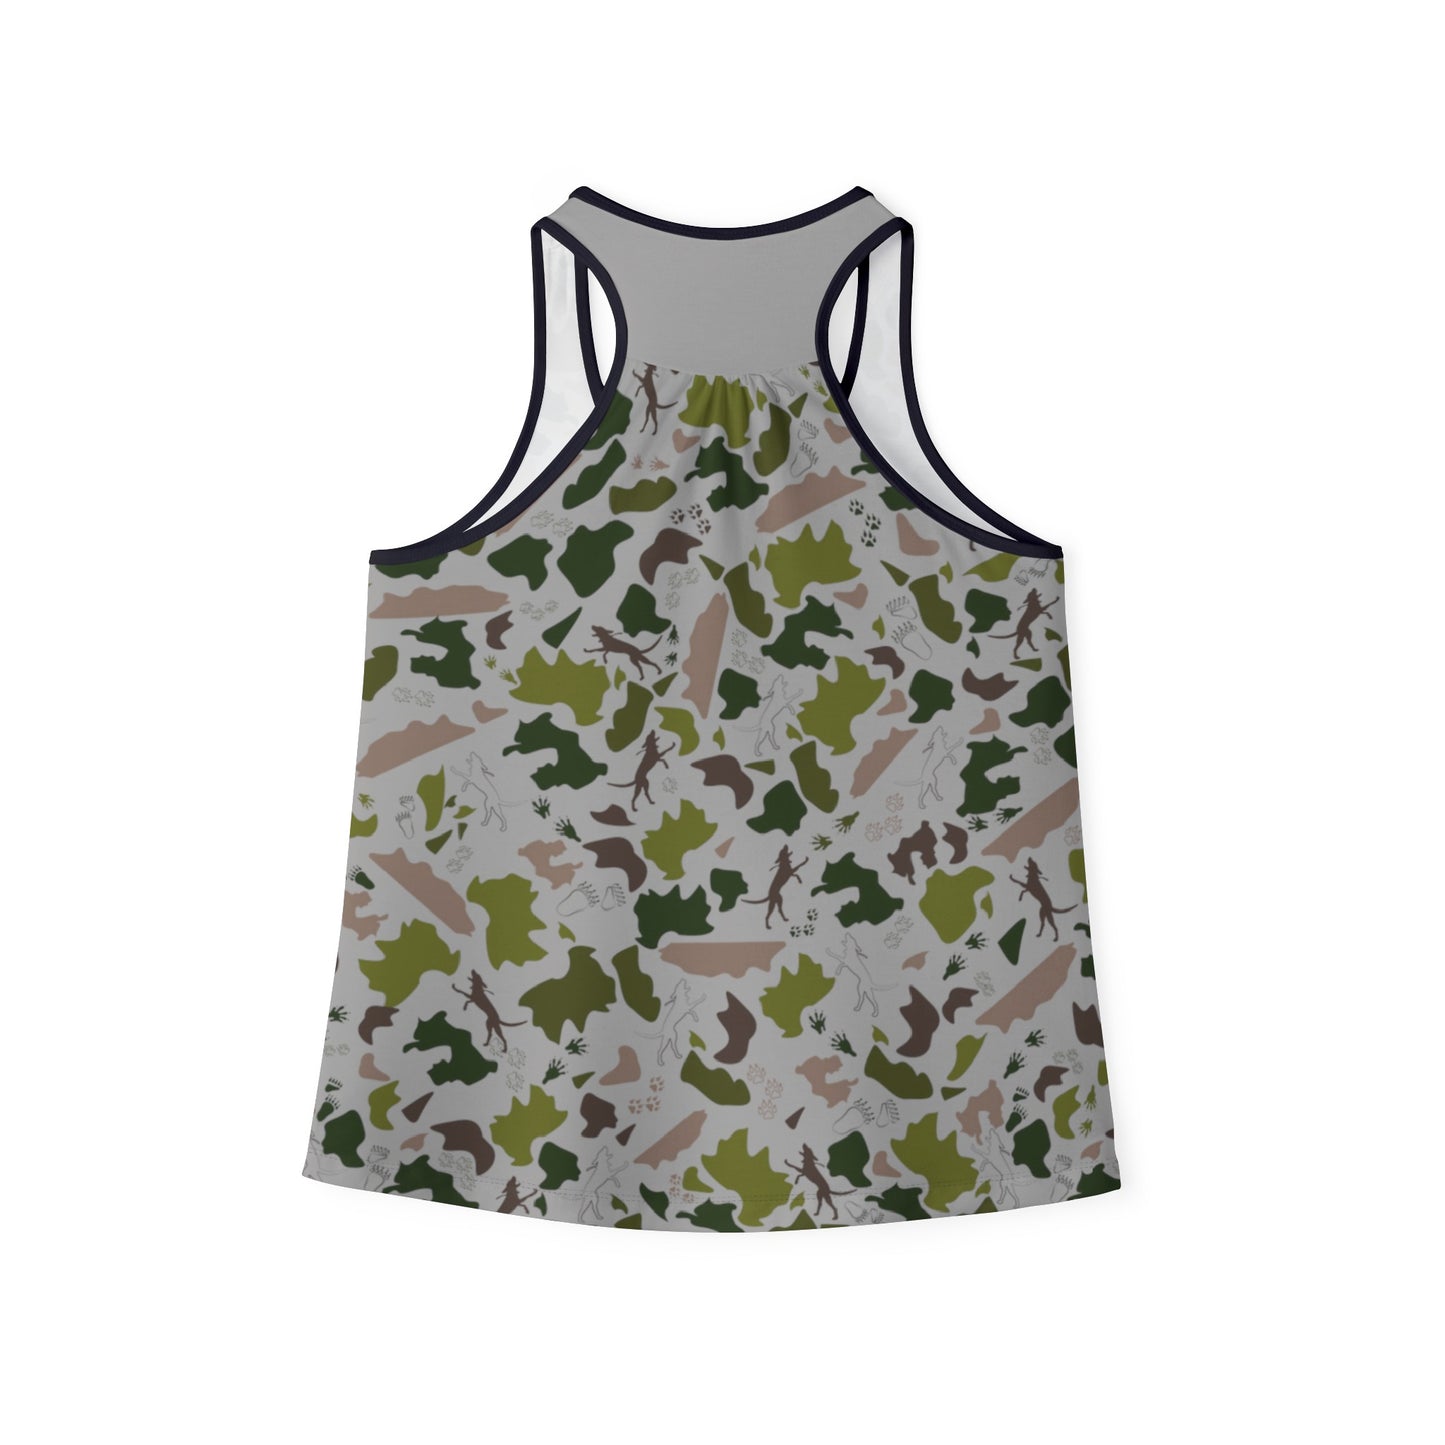 Stonewall828 original camouflage design in grey